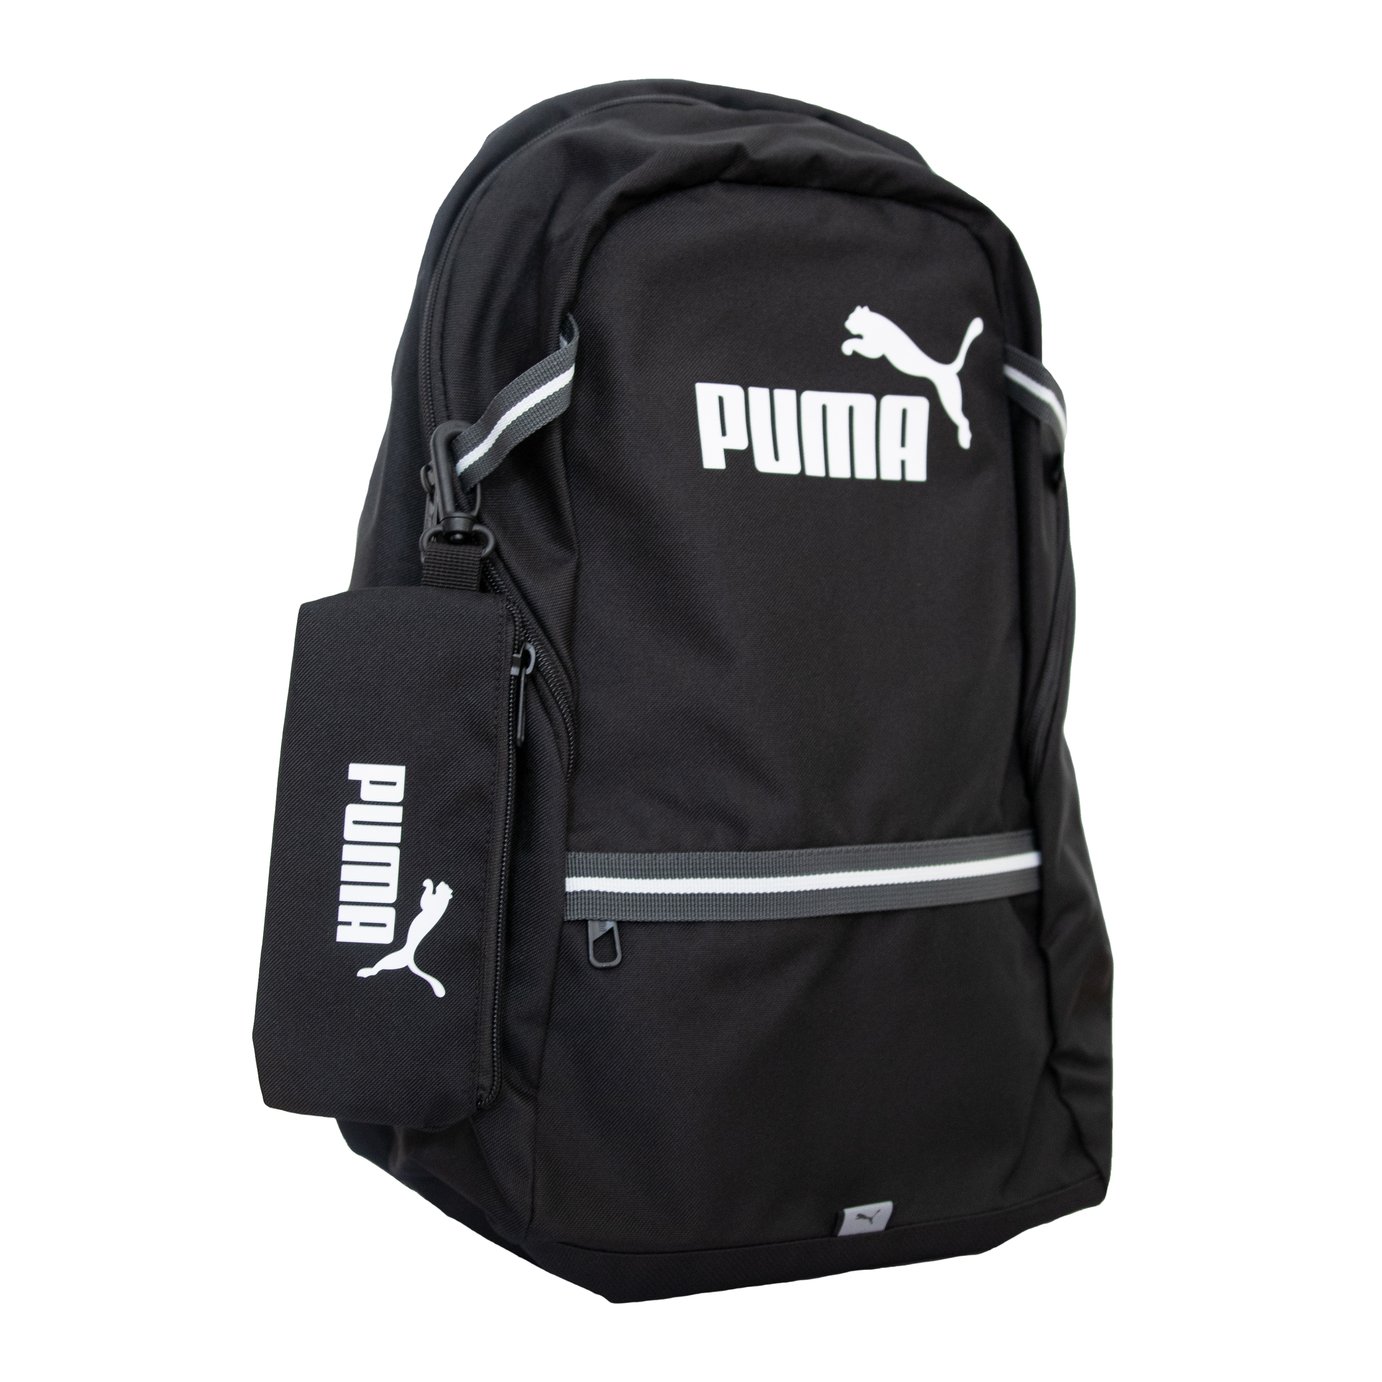 Puma Back To School Backpack Combo Black